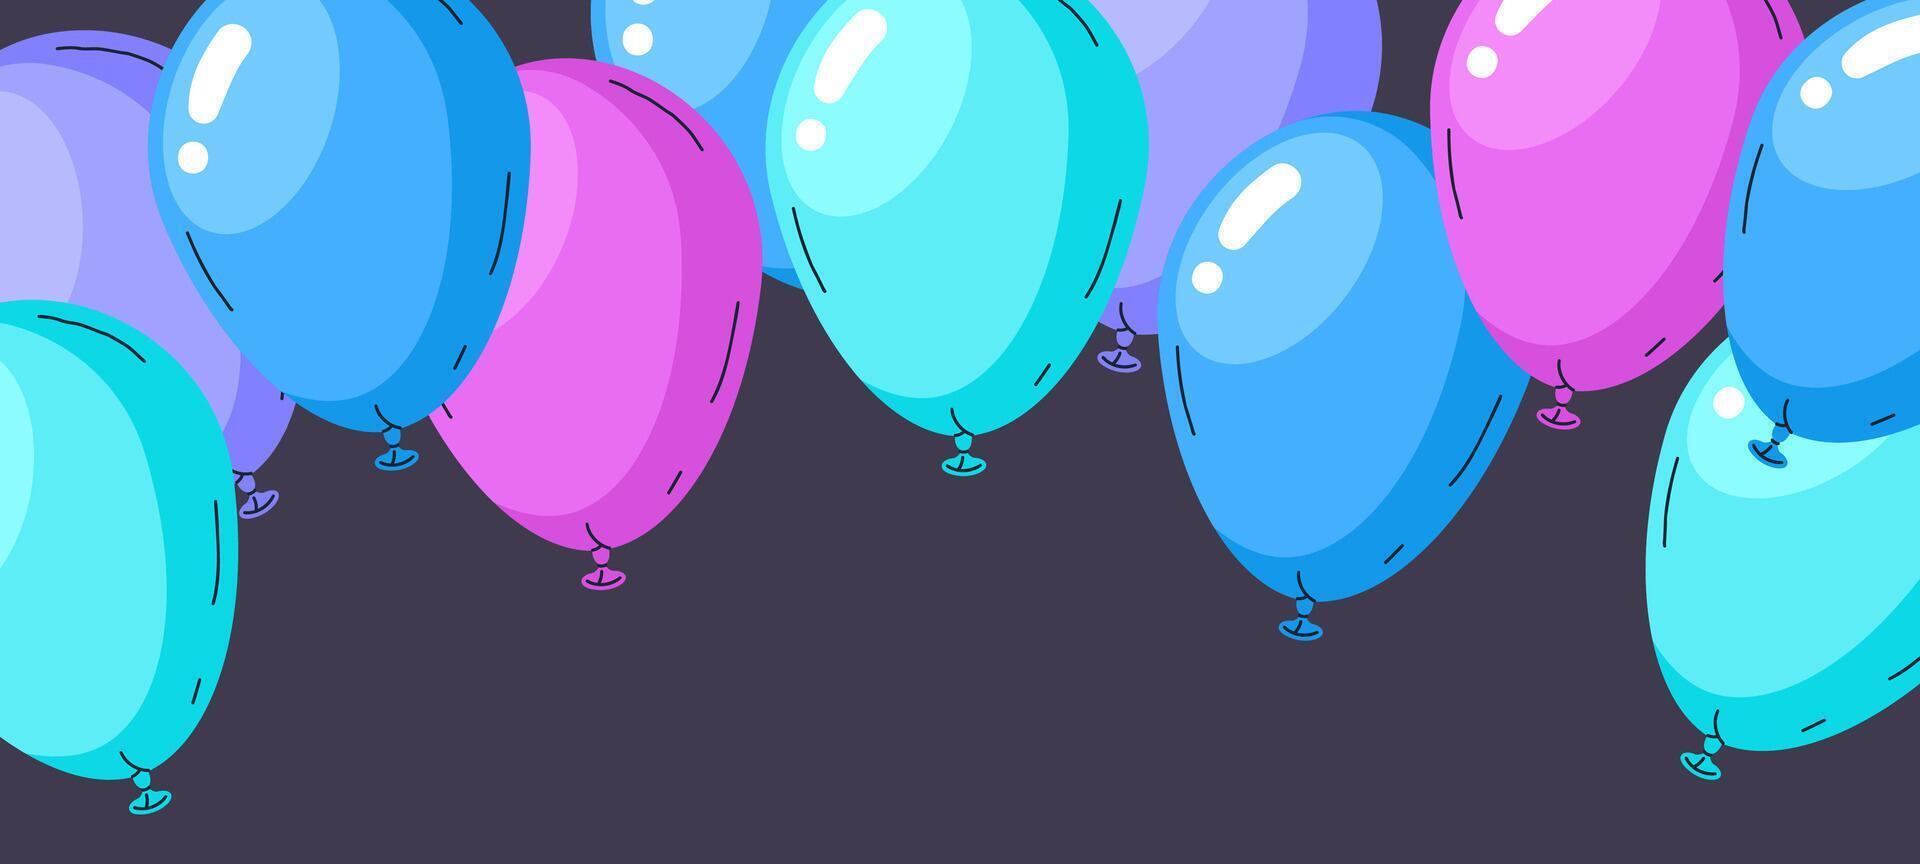 födelsedag fest ballonger bakgrund. flerfärgad helium ballonger, färgrik luft ballong dekorationer platt illustration. glansig ballonger bakgrund vektor